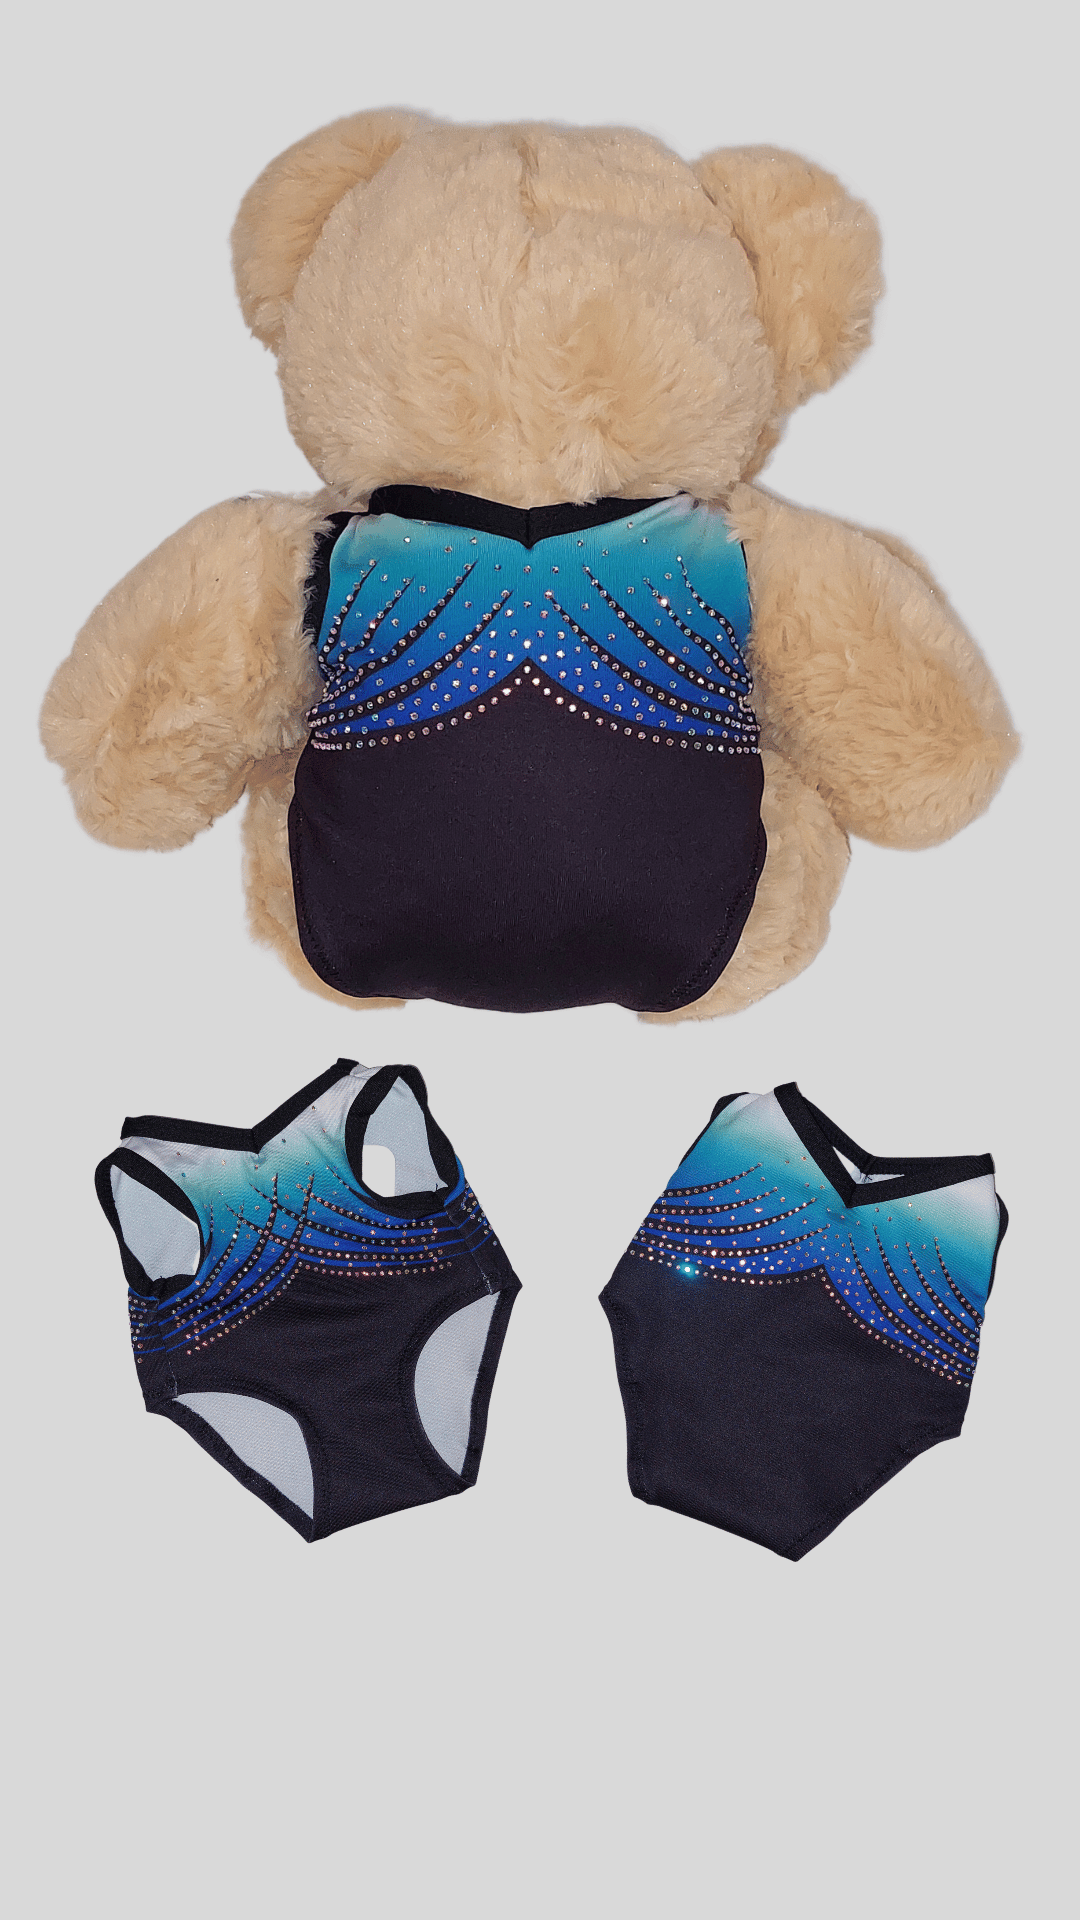 CEK Mascot Teddy Bear C-6002